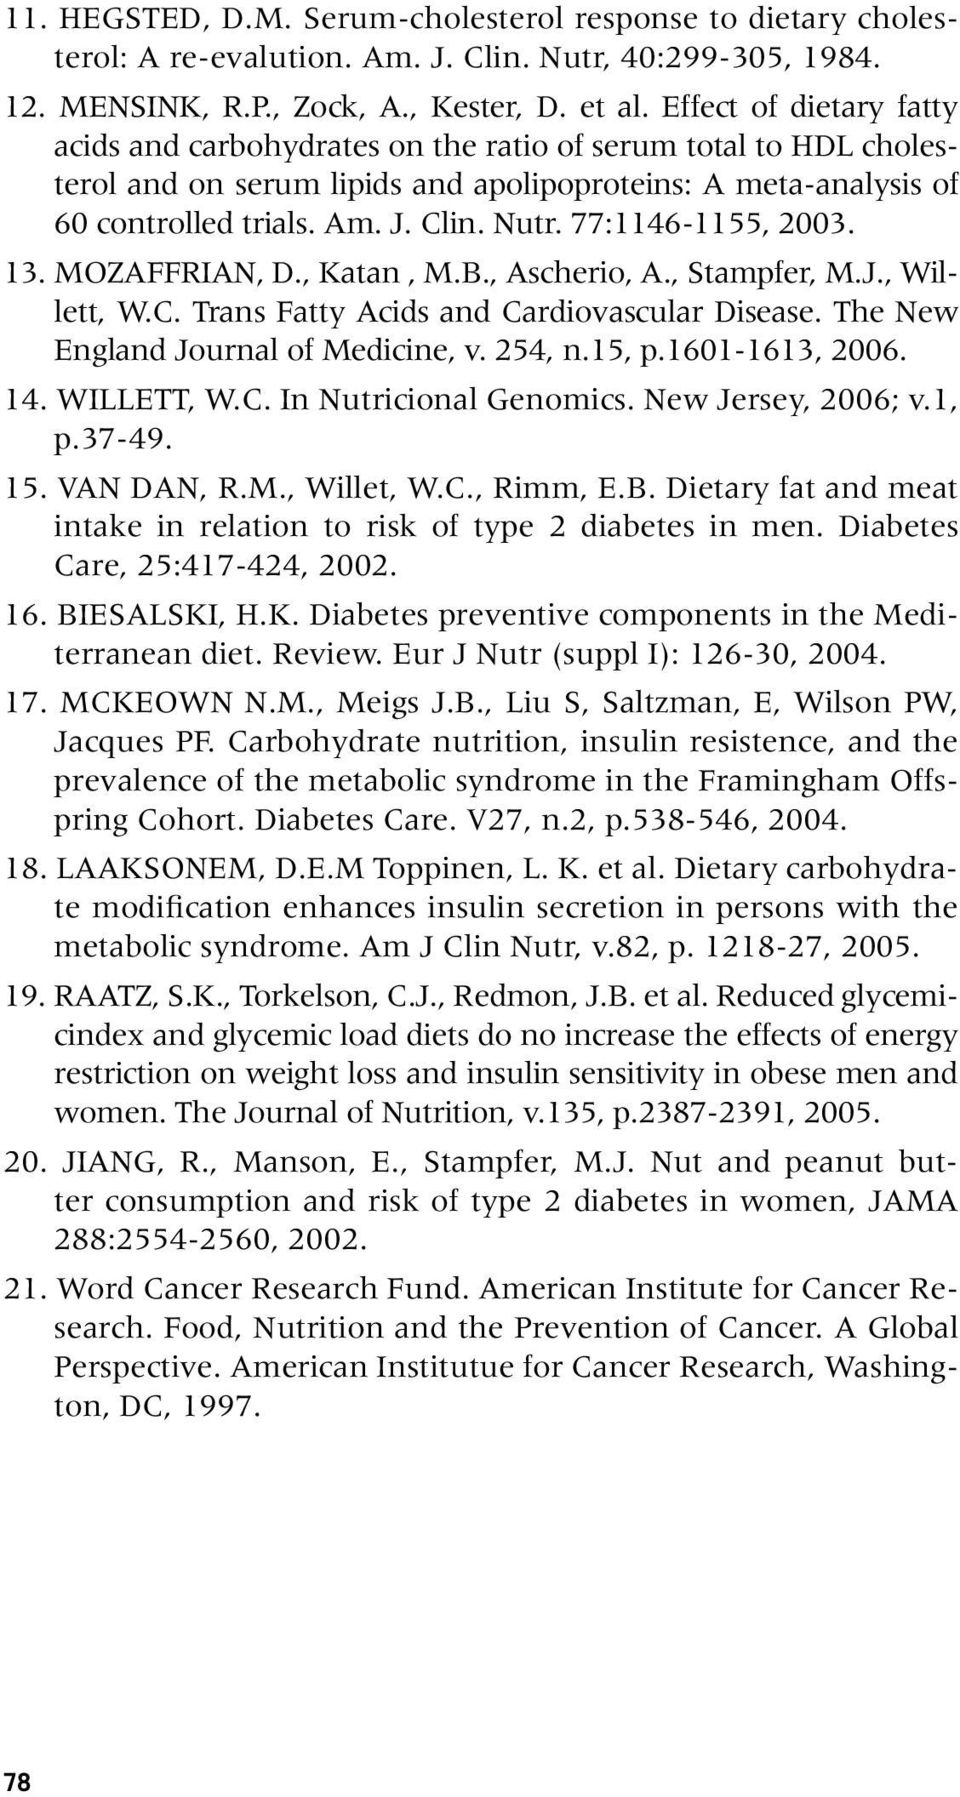 77:1146-1155, 2003. 13. MOZAFFRIAN, D., Katan, M.B., Ascherio, A., Stampfer, M.J., Willett, W.C. Trans Fatty Acids and Cardiovascular Disease. The New England Journal of Medicine, v. 254, n.15, p.